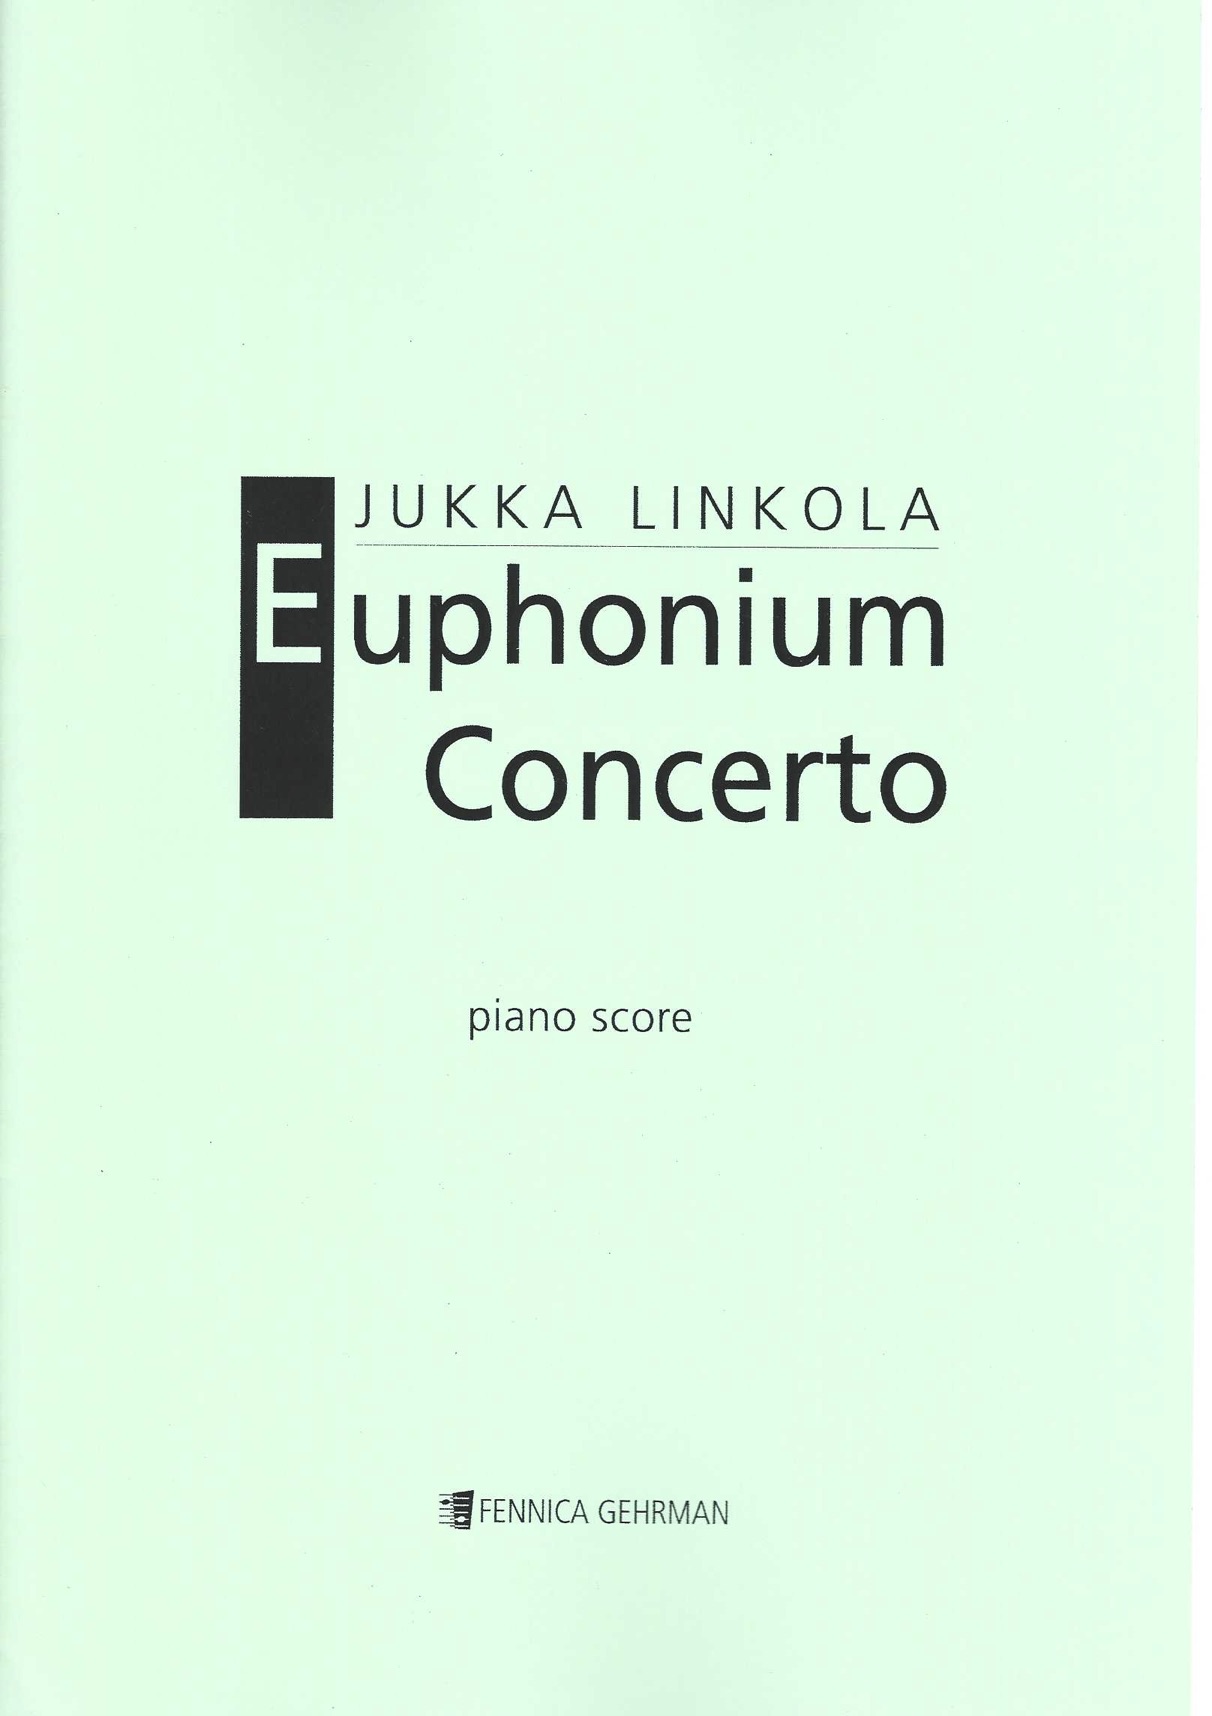 Euphonium Concerto - Yukka Linkola - Euphonium and Piano 